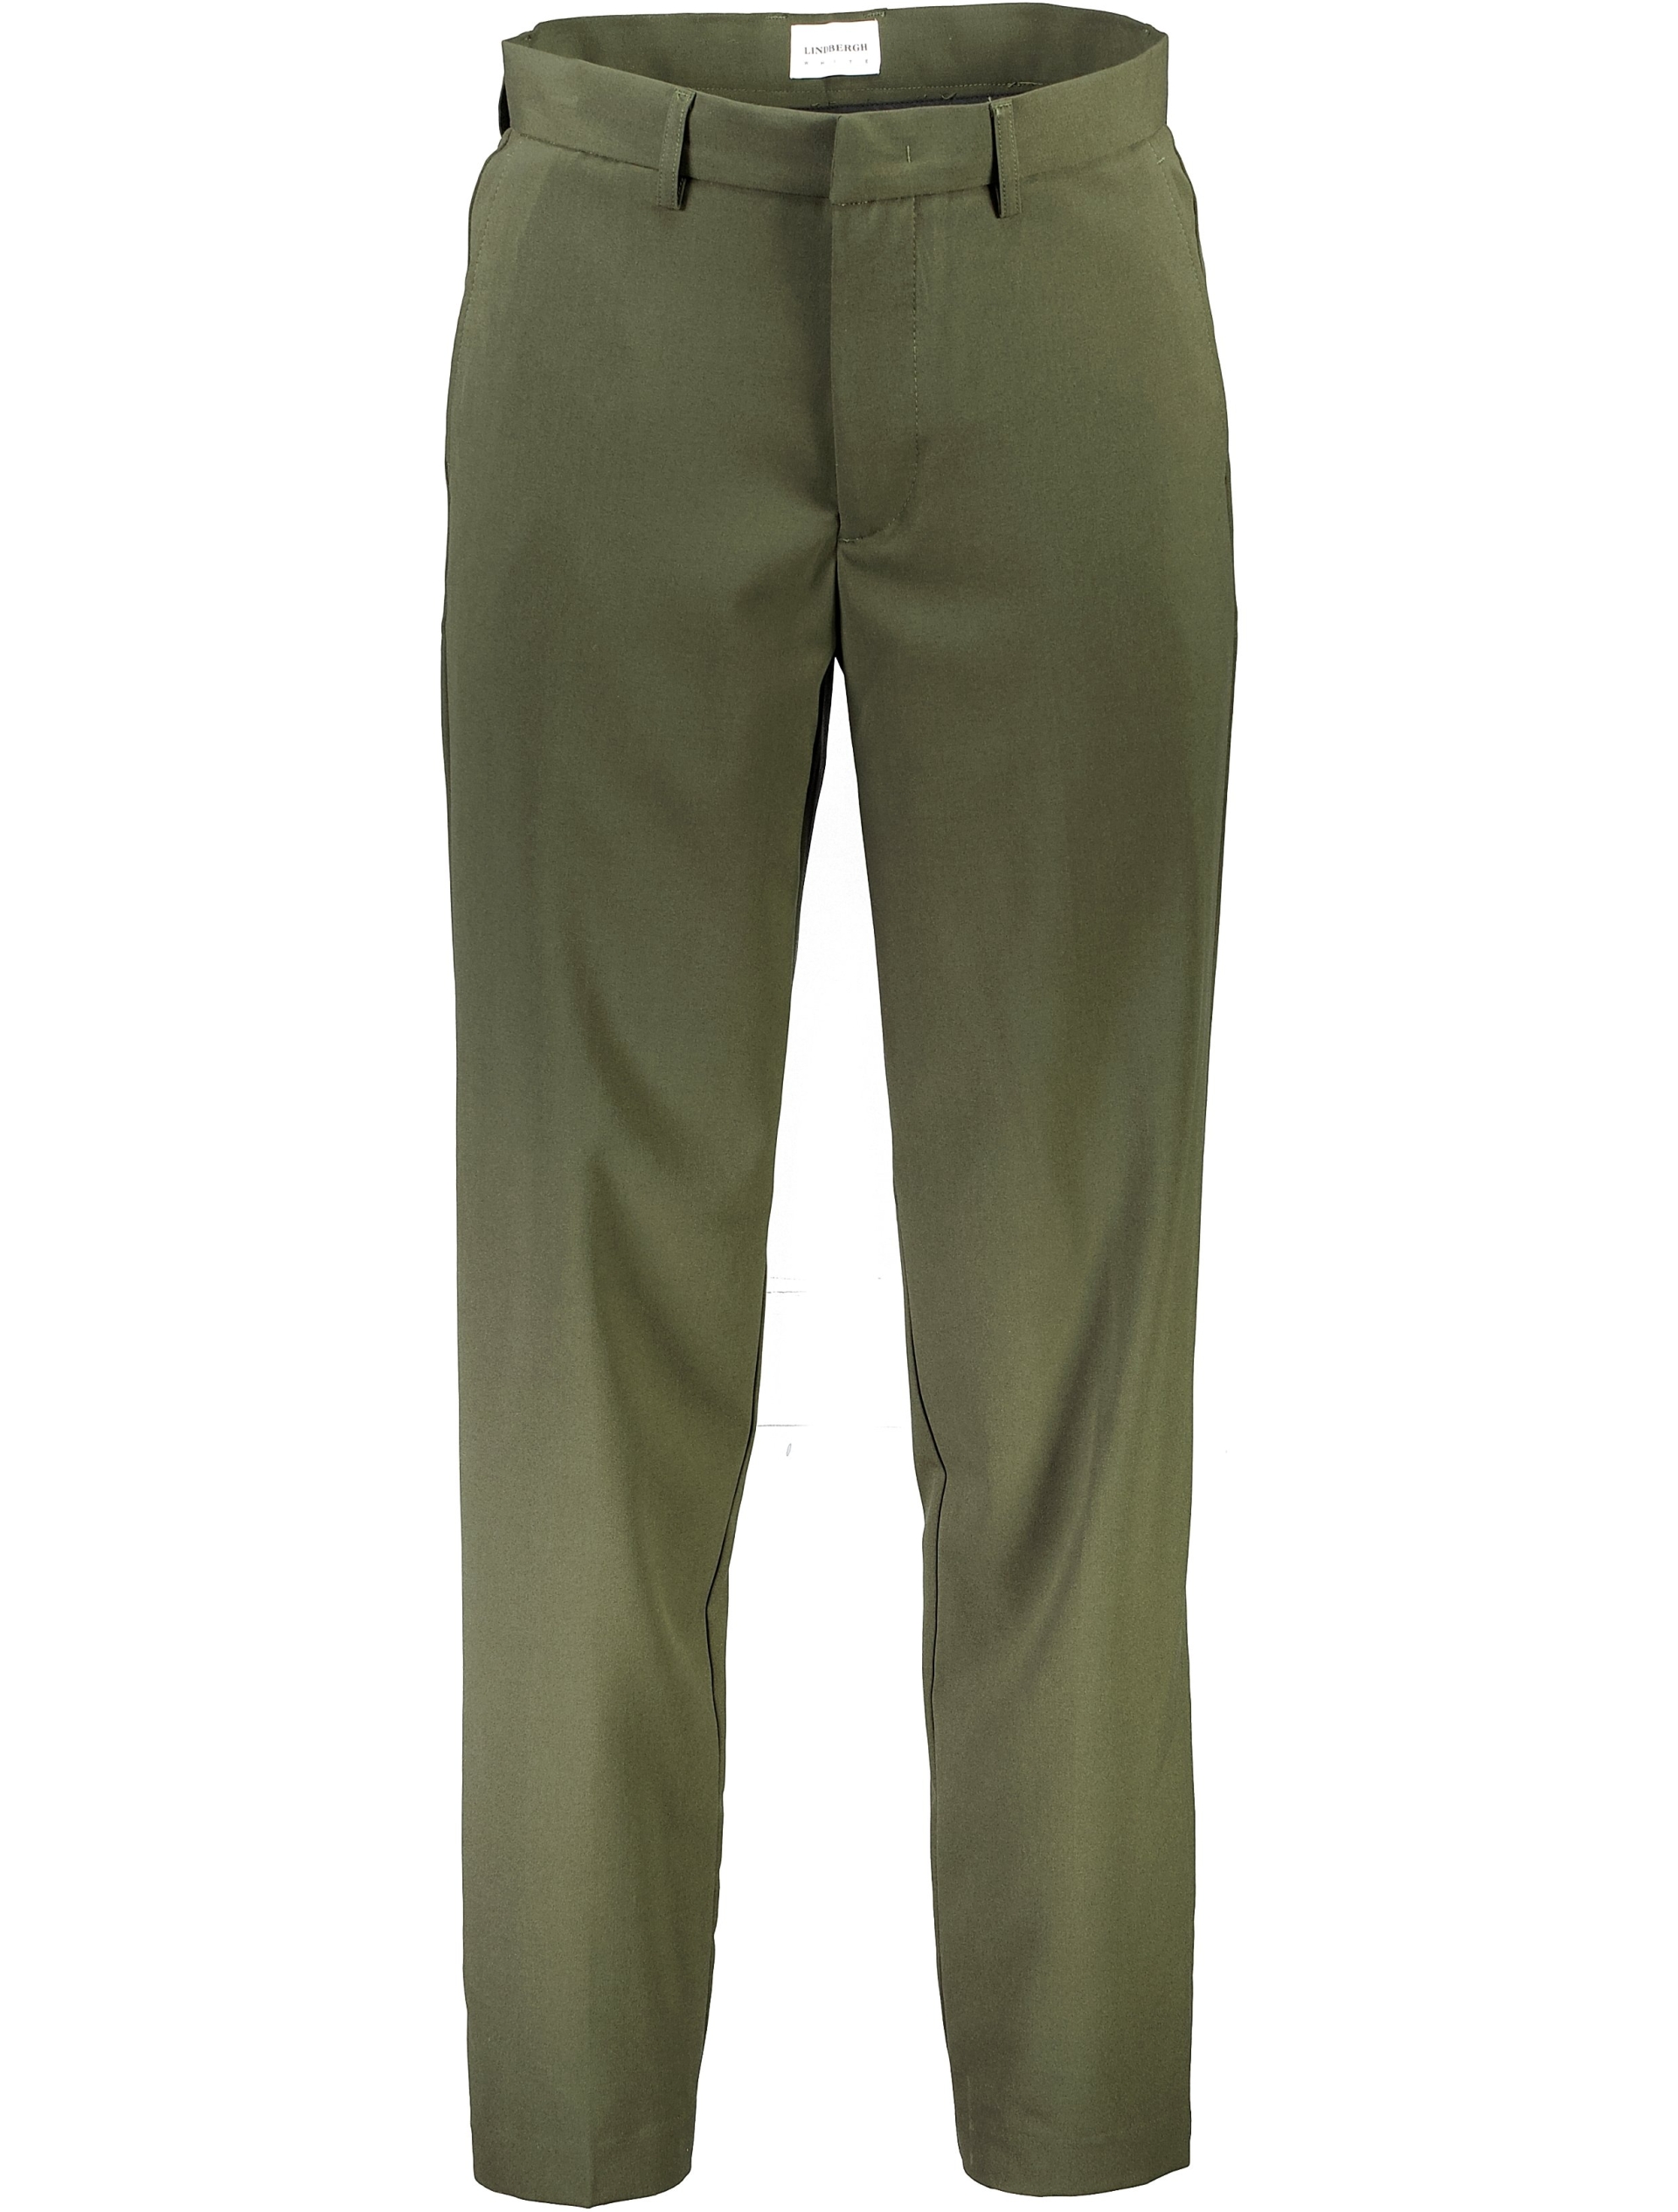 Lindbergh Klassiske bukser grøn / wood green